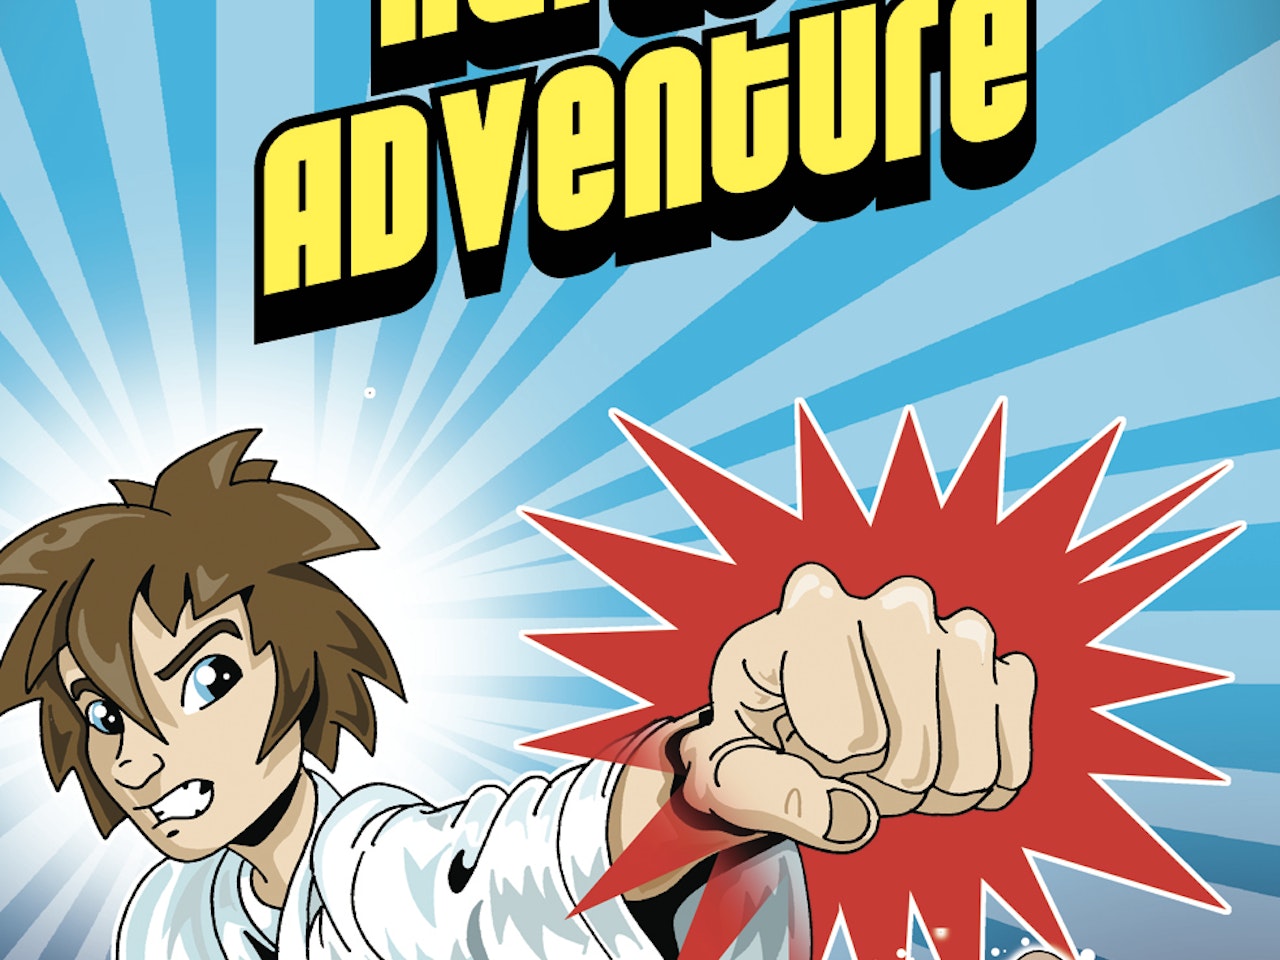 martial arts kung fu fighting karate fantasy adventure Funky Happy manga anime childrens cartoon comic strip Book cover illustration animation